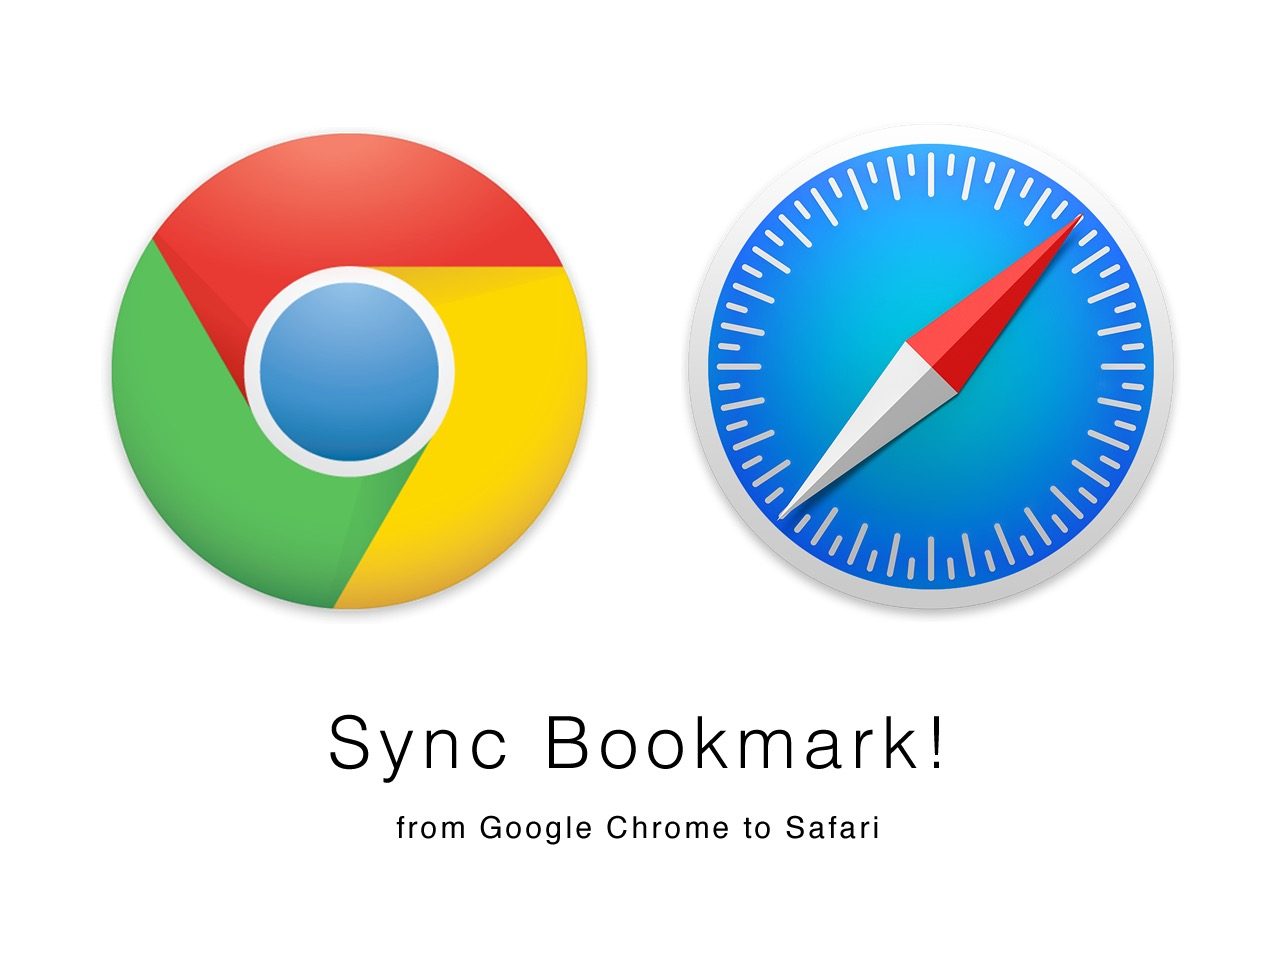 Google ChromeからSafariにブックマークと履歴を簡単に同期させる方法